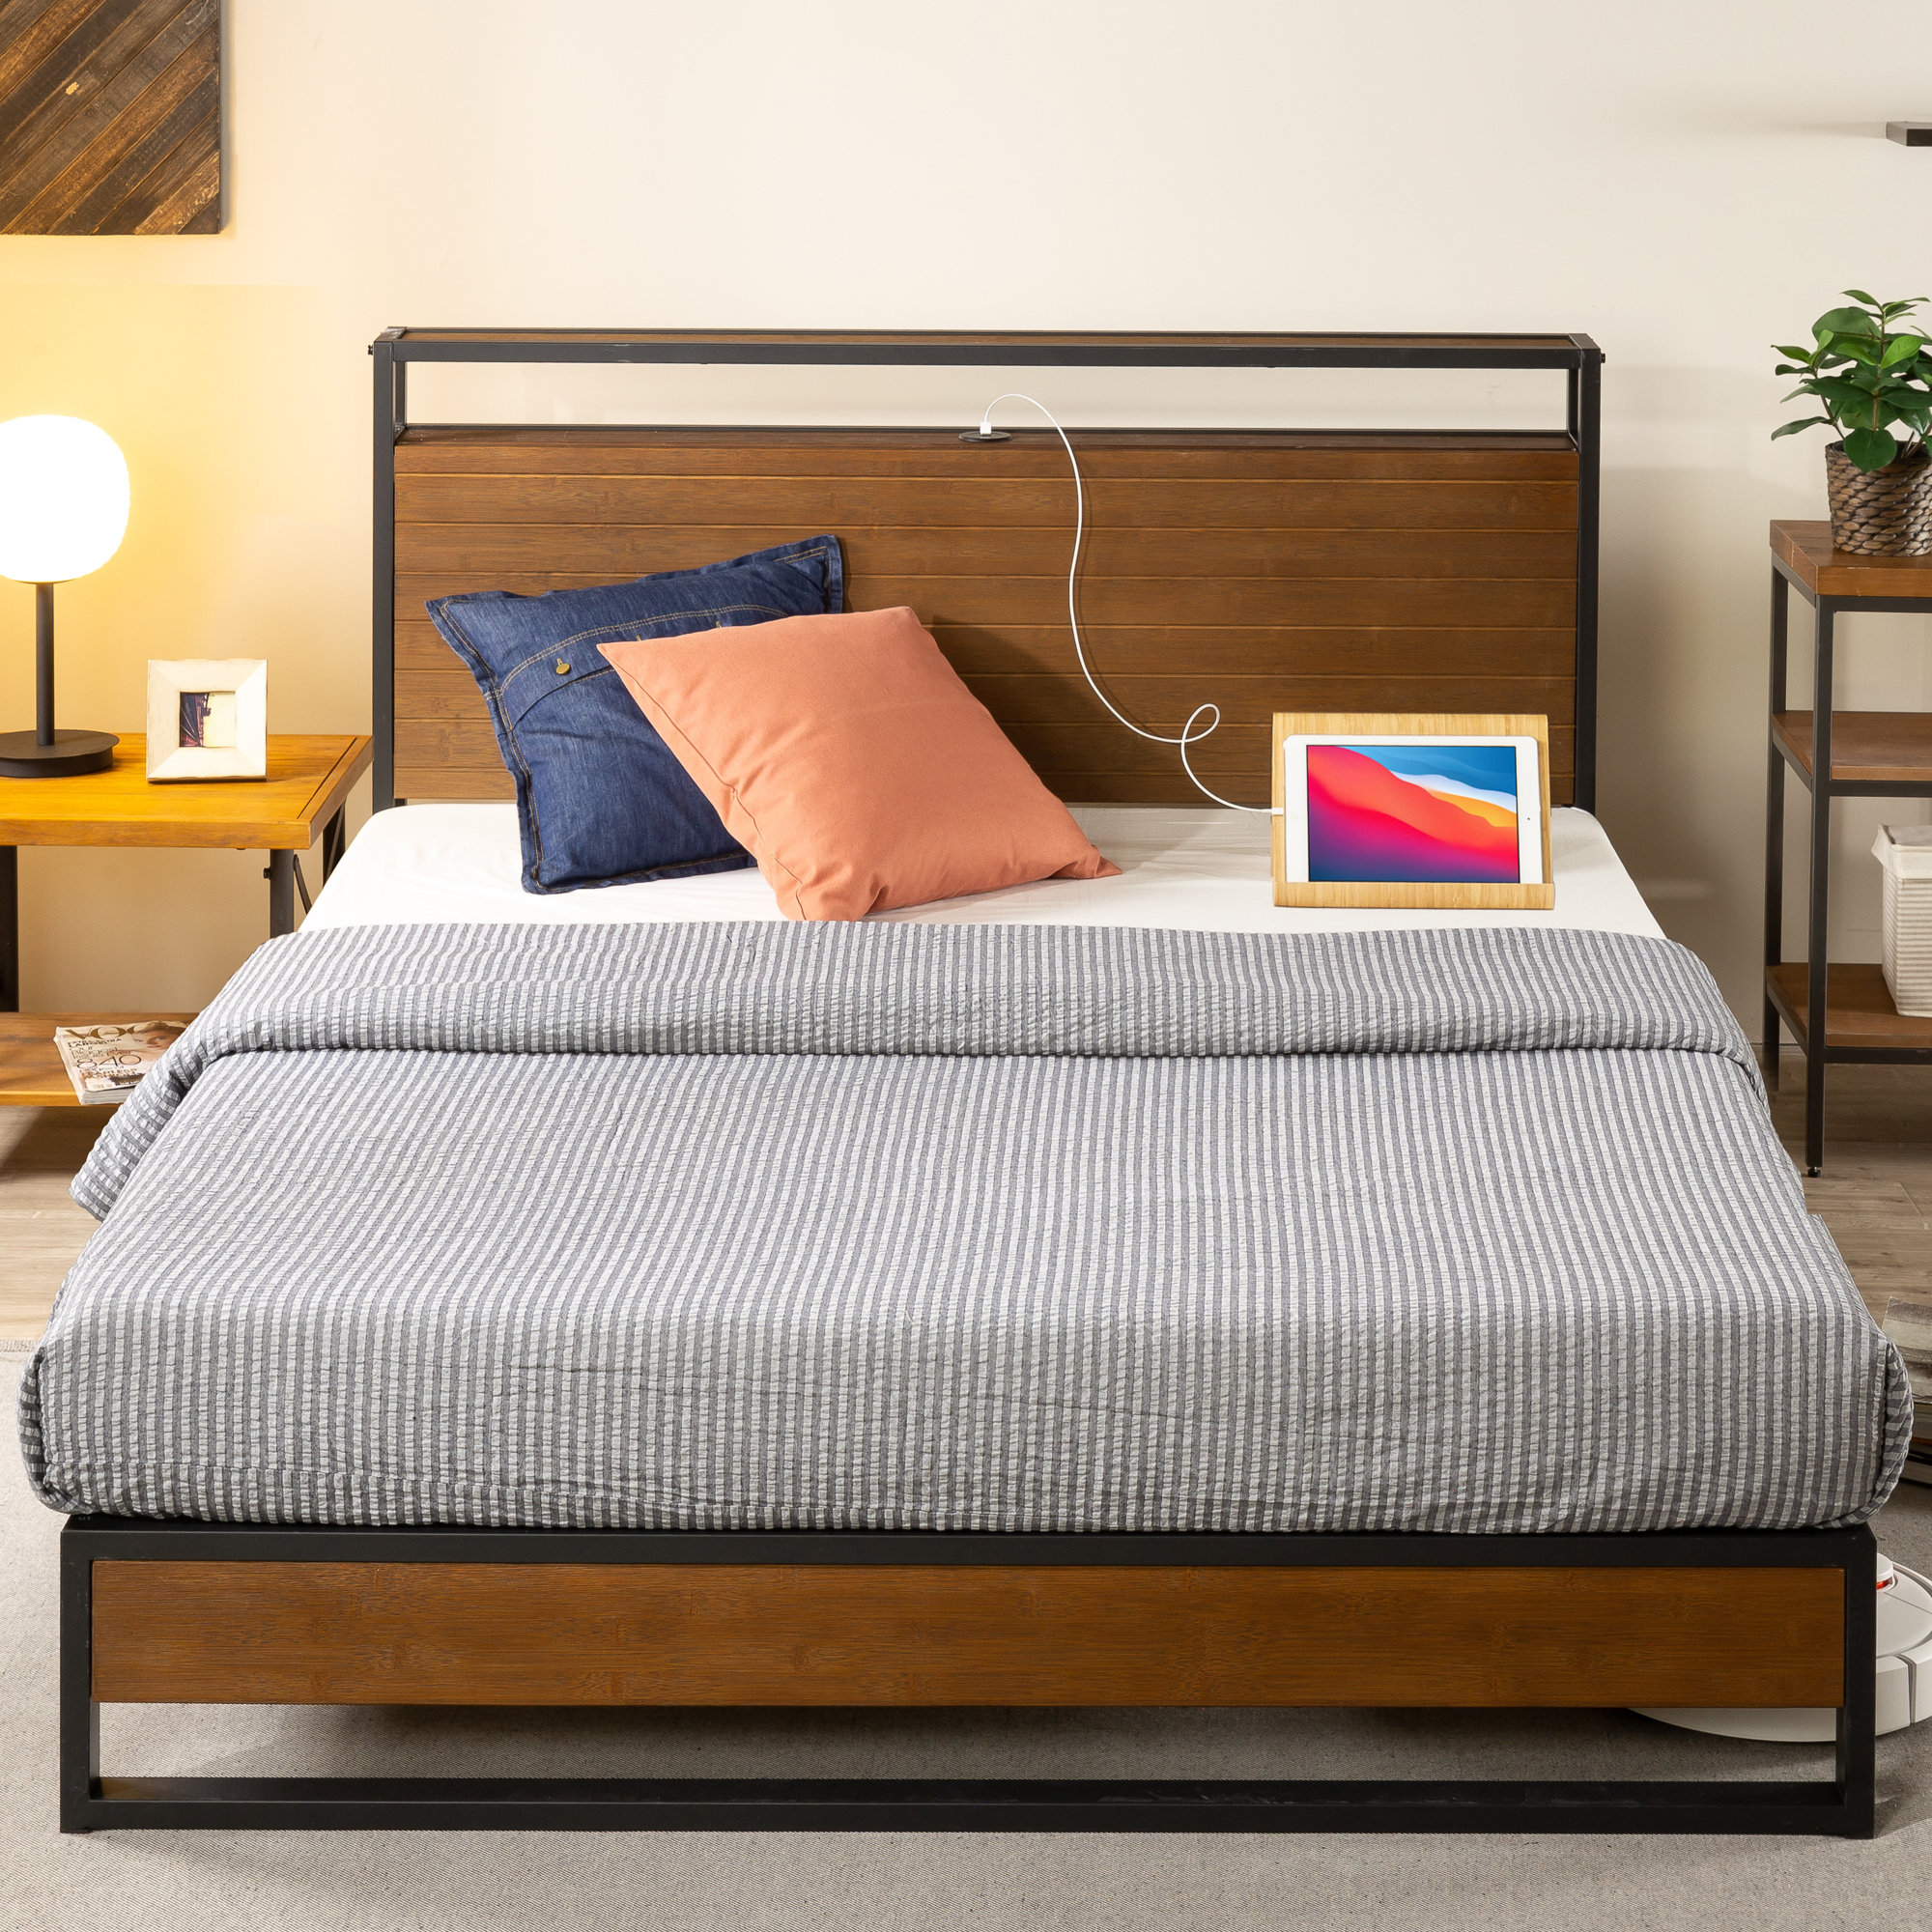 Twin size Platform Bed Wood Storage Bed Frame w/2 Drawers Wood Slats Headboard 